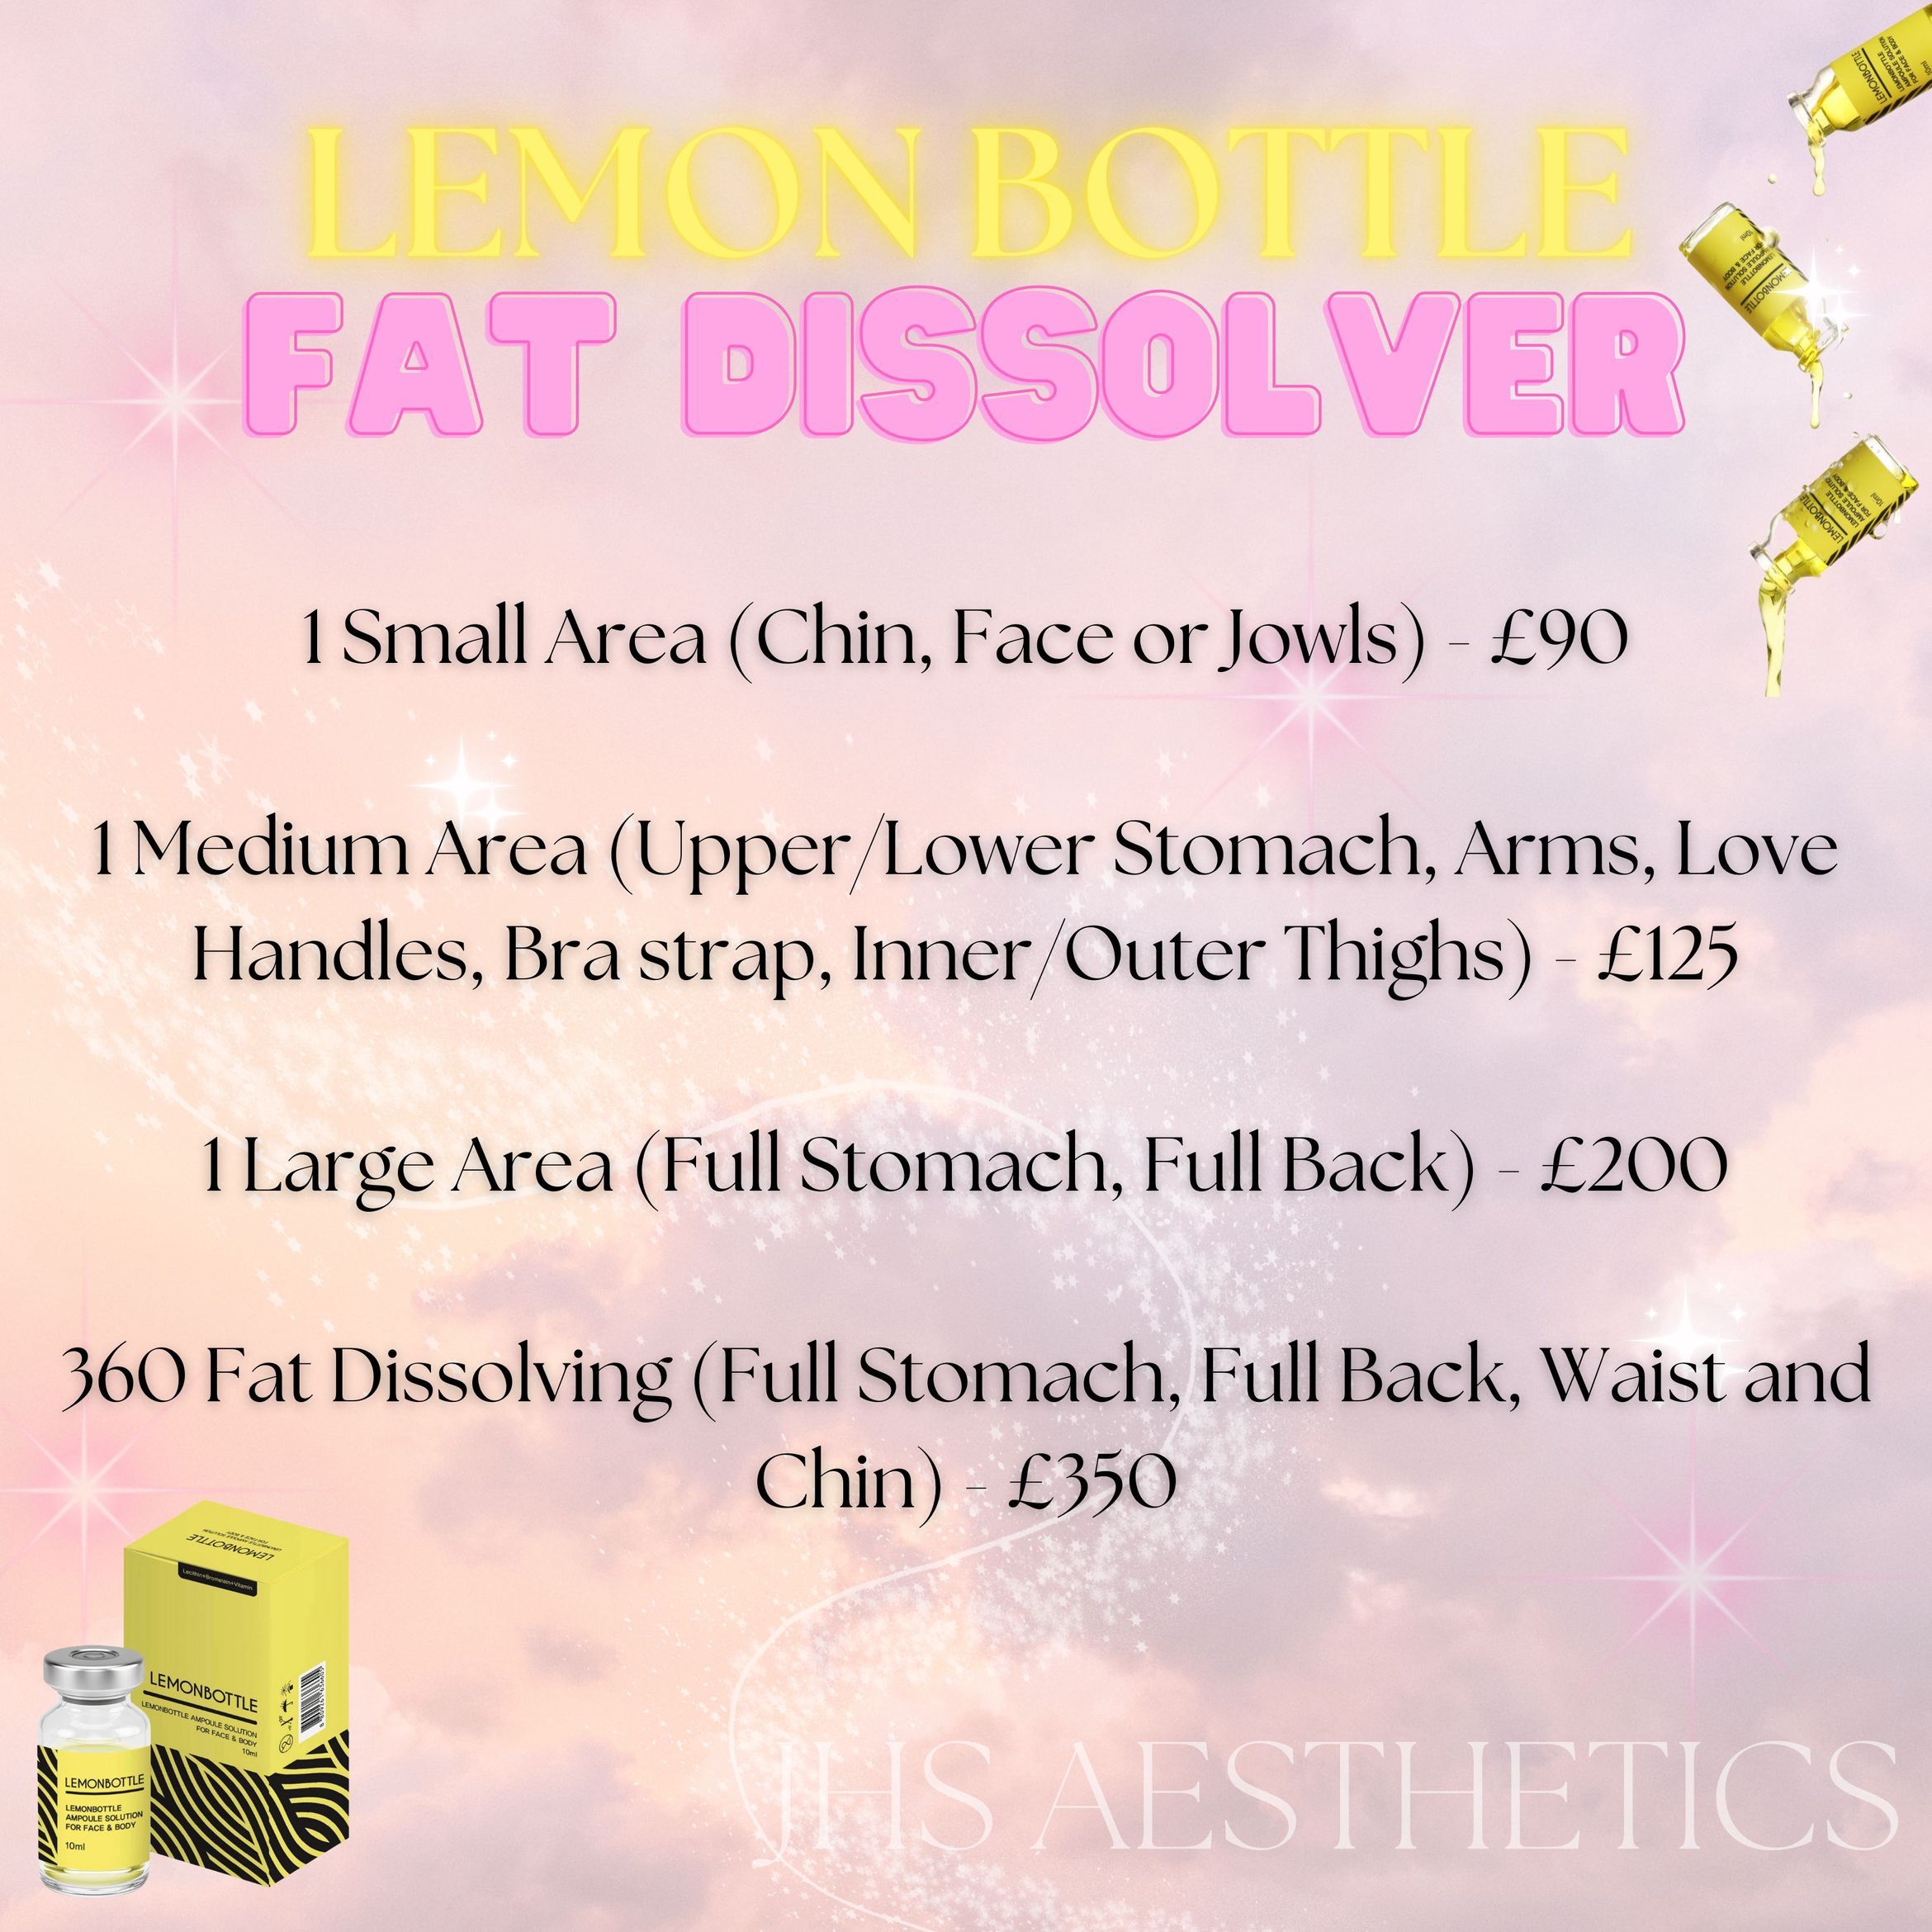 360 Lemon Bottle Fat Dissolve WHOLE BODY portfolio